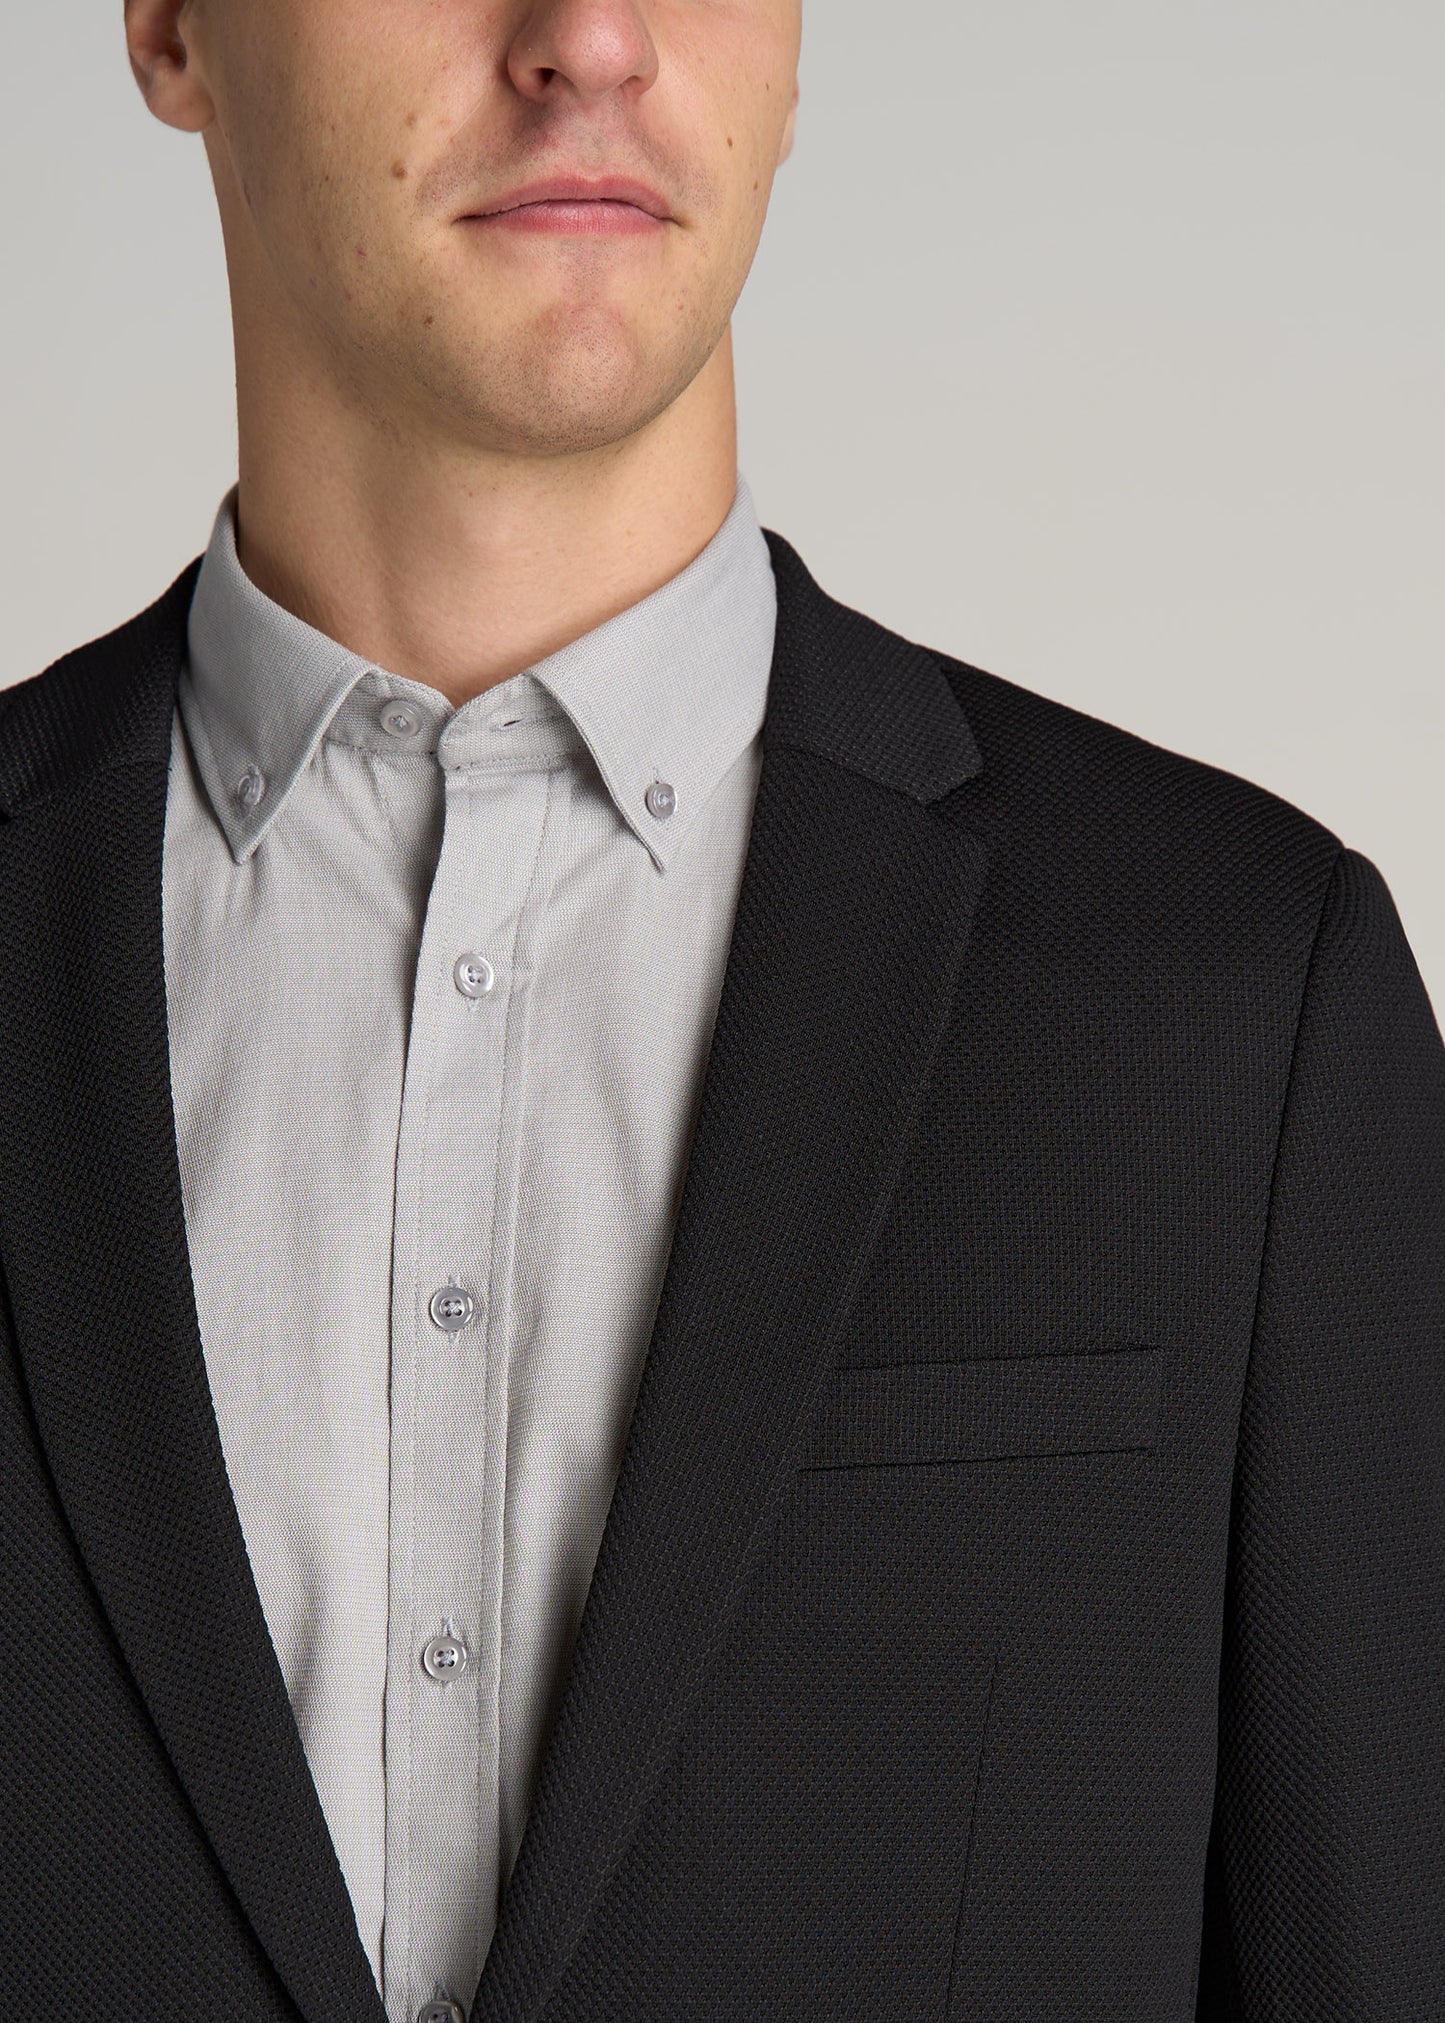 Textured Blazer for Tall Men in Black